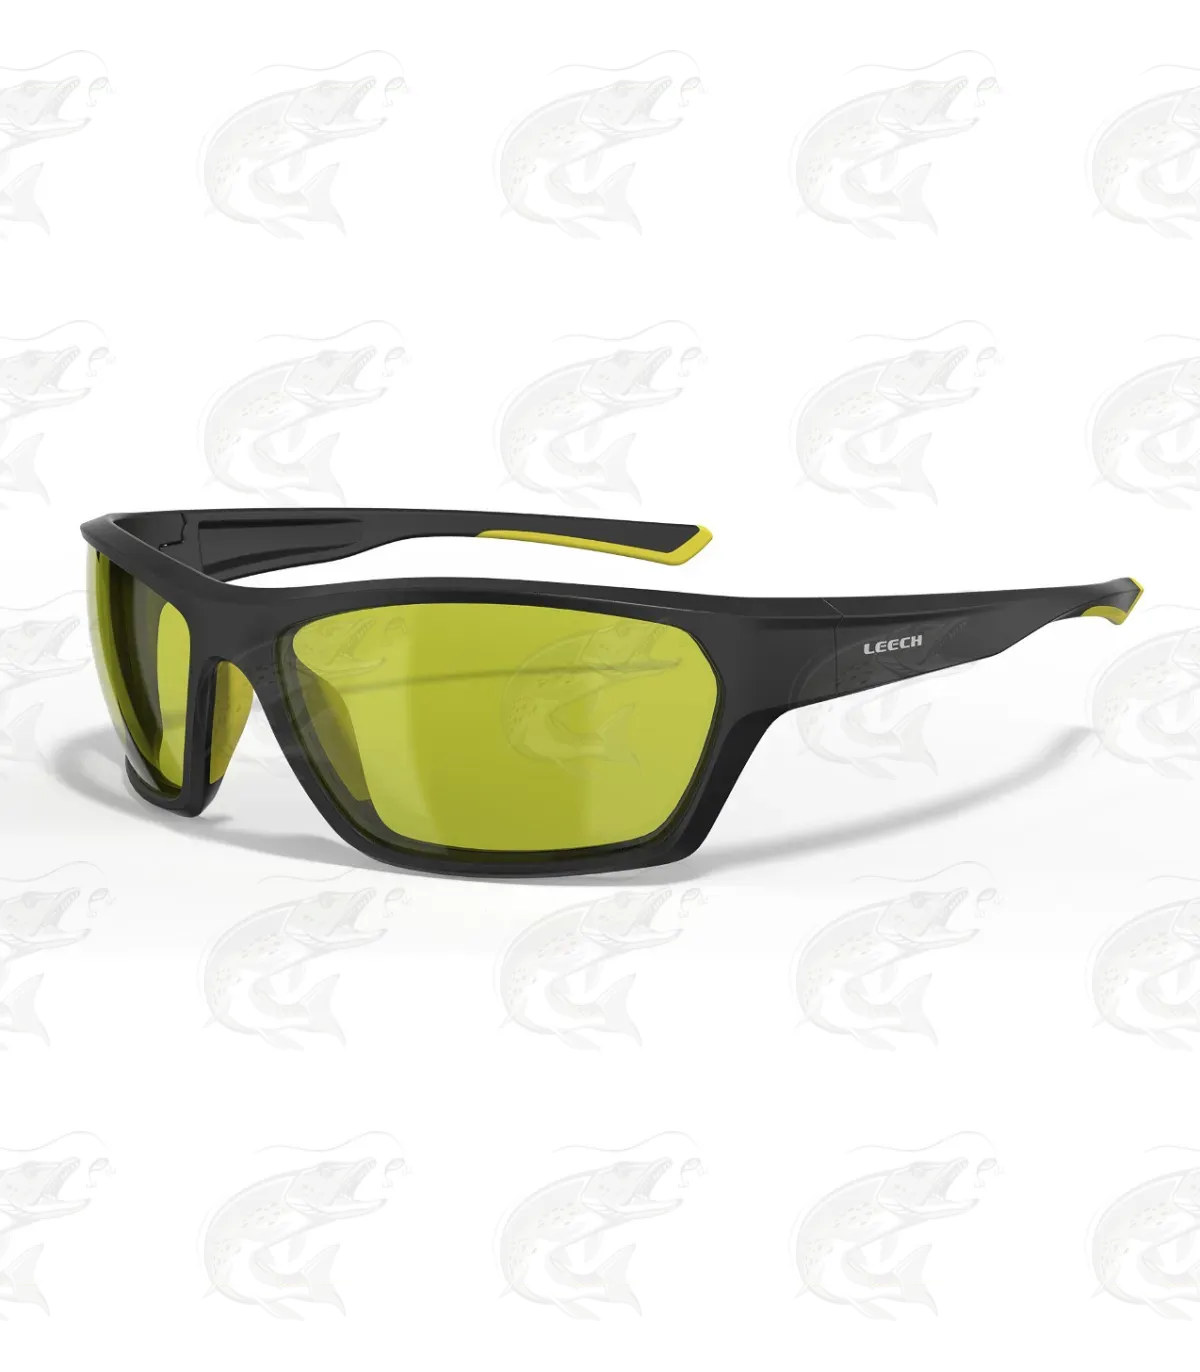 Leech ATW2 Polarized Fishing Sunglasses | ATW2 Yellow - Yellow Lens